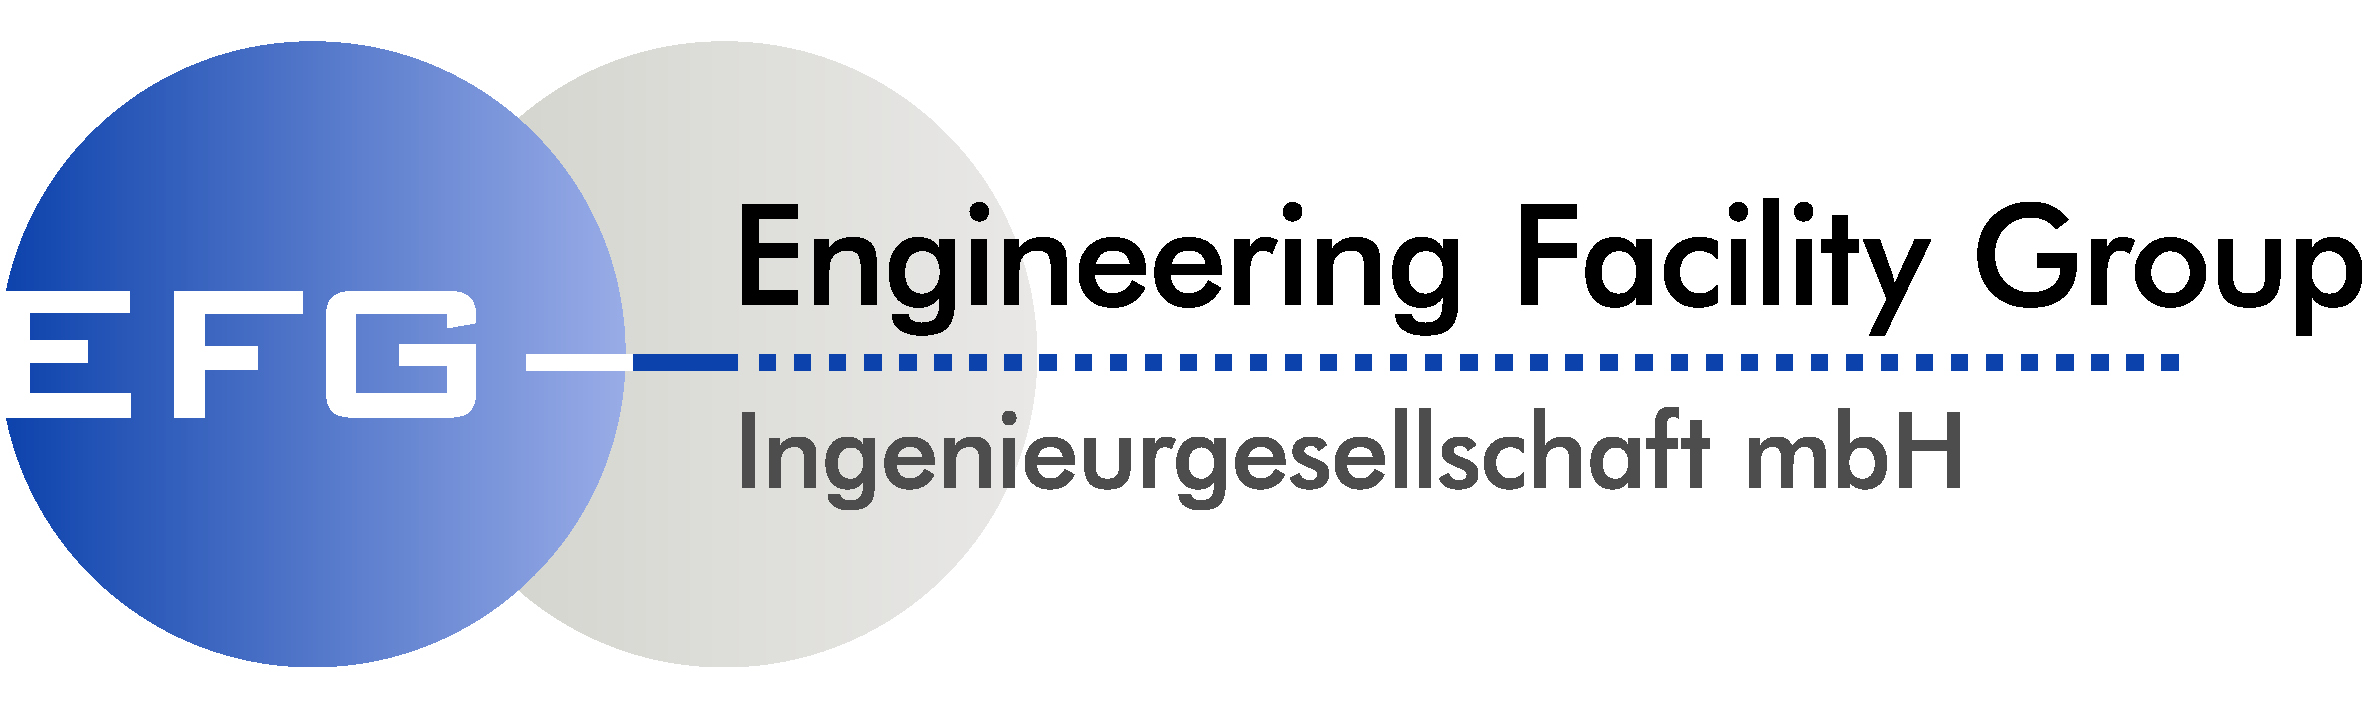 EFG: Engineering Facility Group